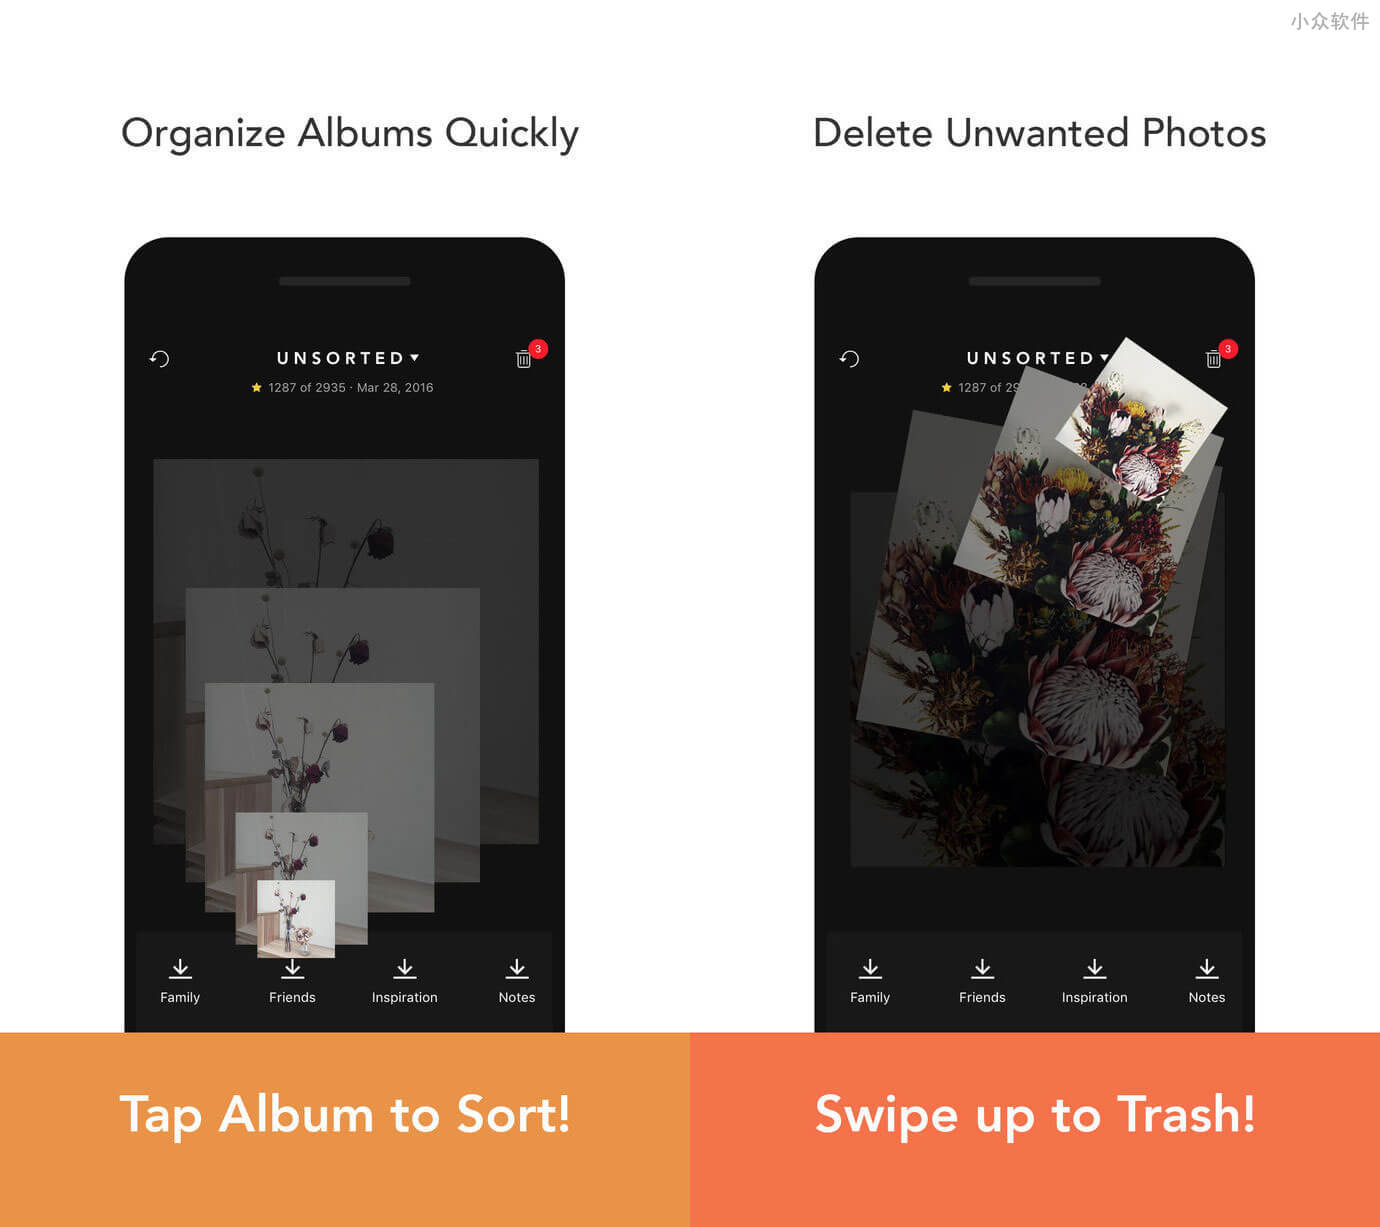 Slidebox – 通过拖拽整理照片：重新分类与删除低质量照片 [iOS/Android]